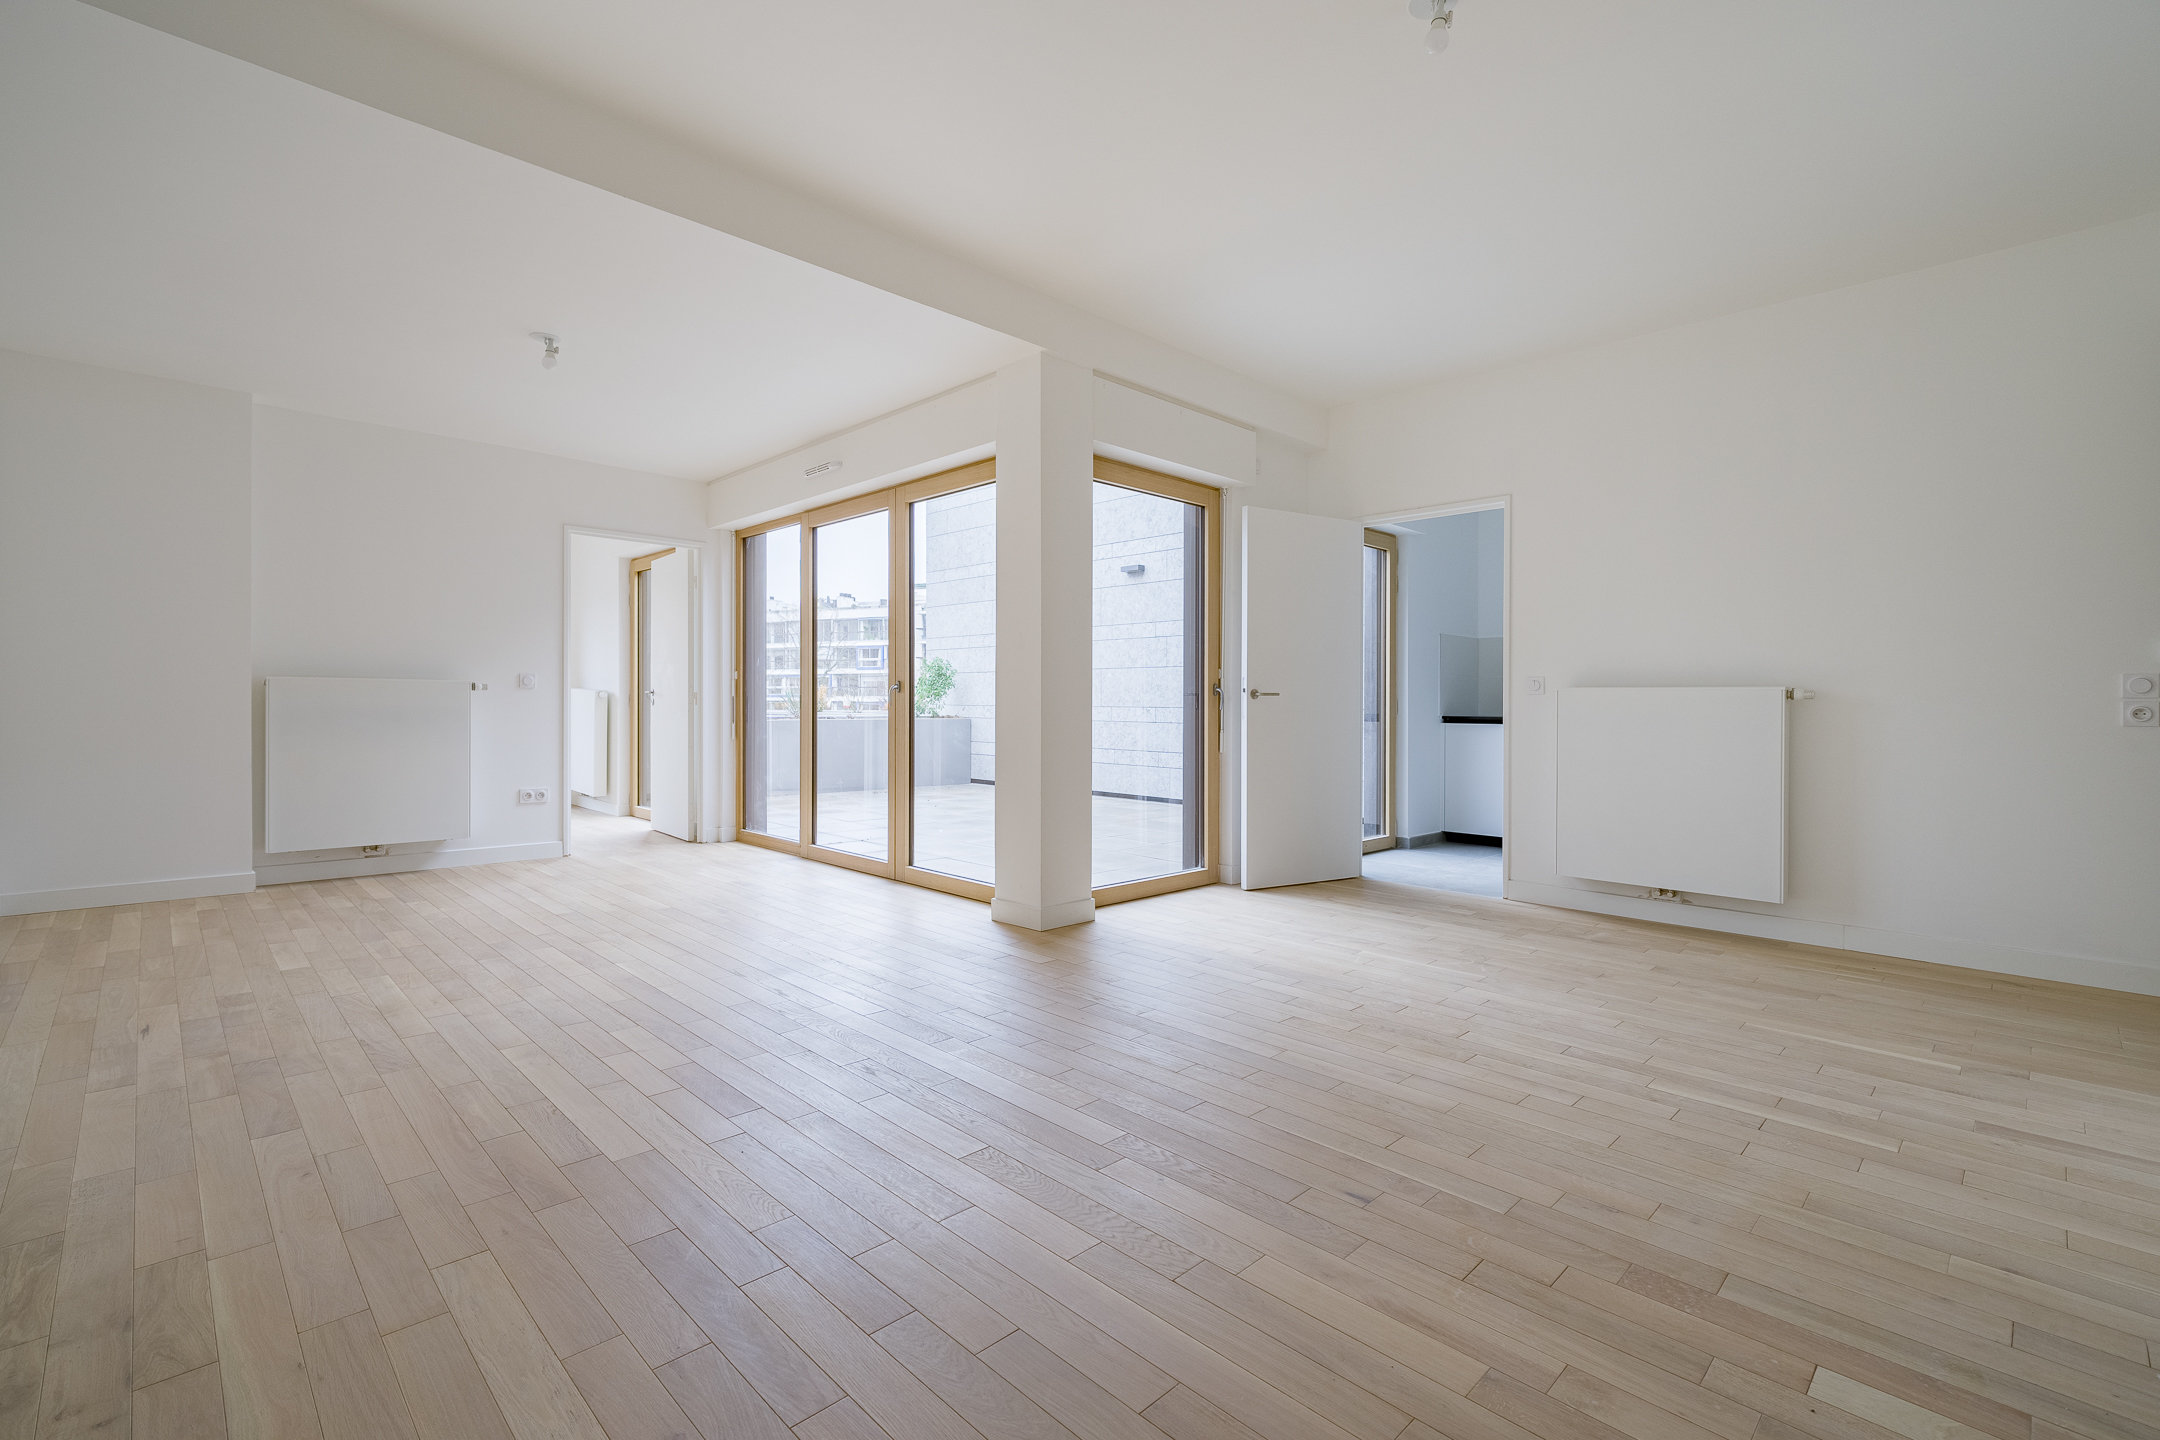 Appartement a louer ville-d'avray - 5 pièce(s) - 99.49 m2 - Surfyn